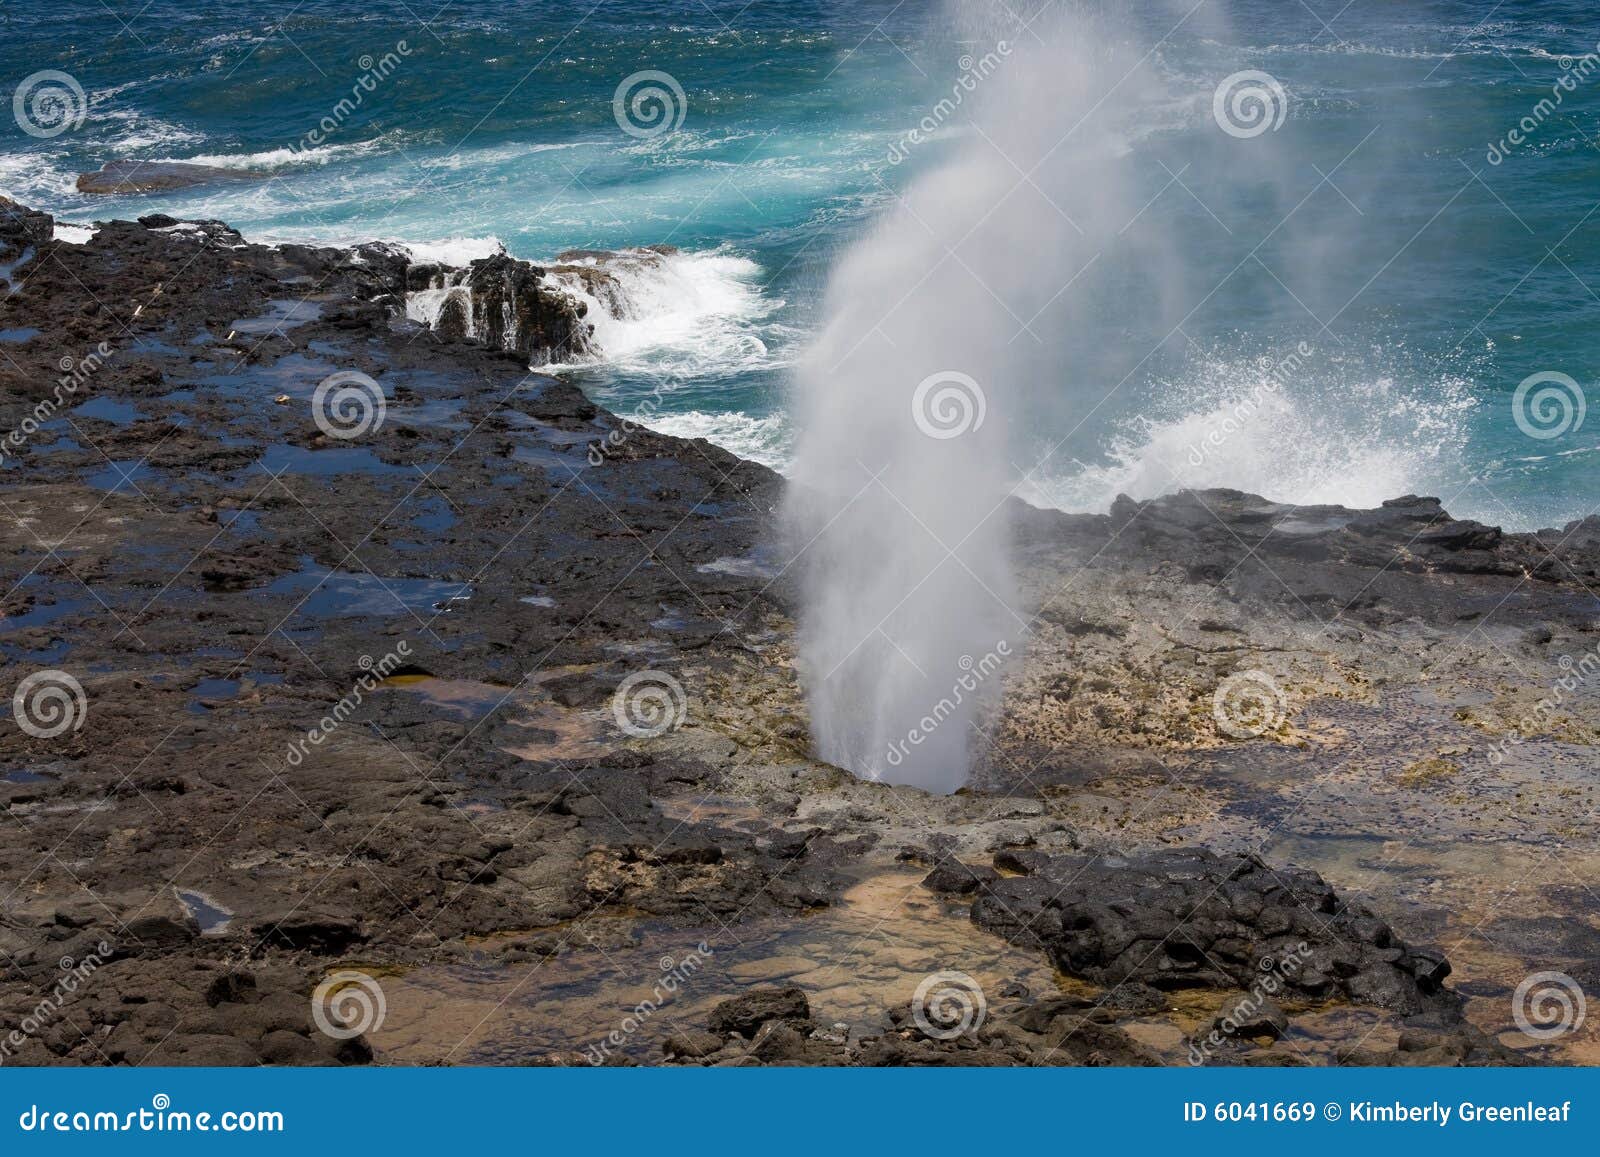 spouting horn blowhole, kauai, hawaii